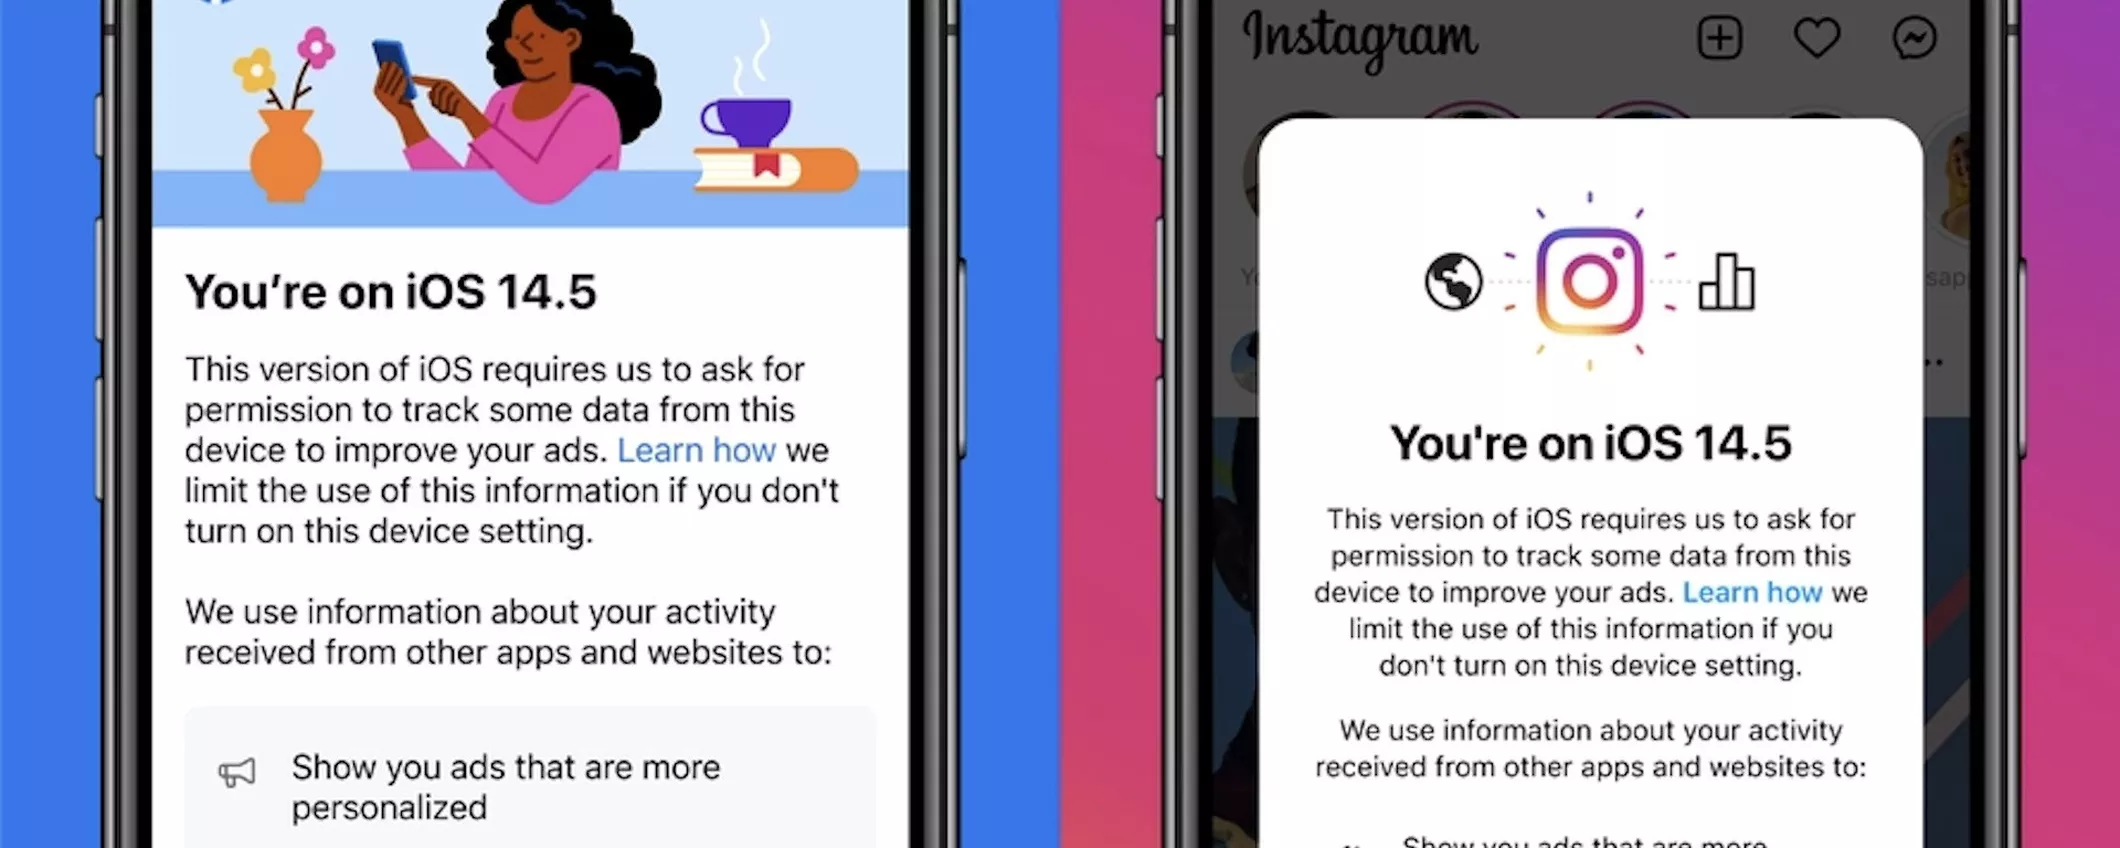 Facebook e Instagram a pagamento? Cosa cambia con iOS 14.5